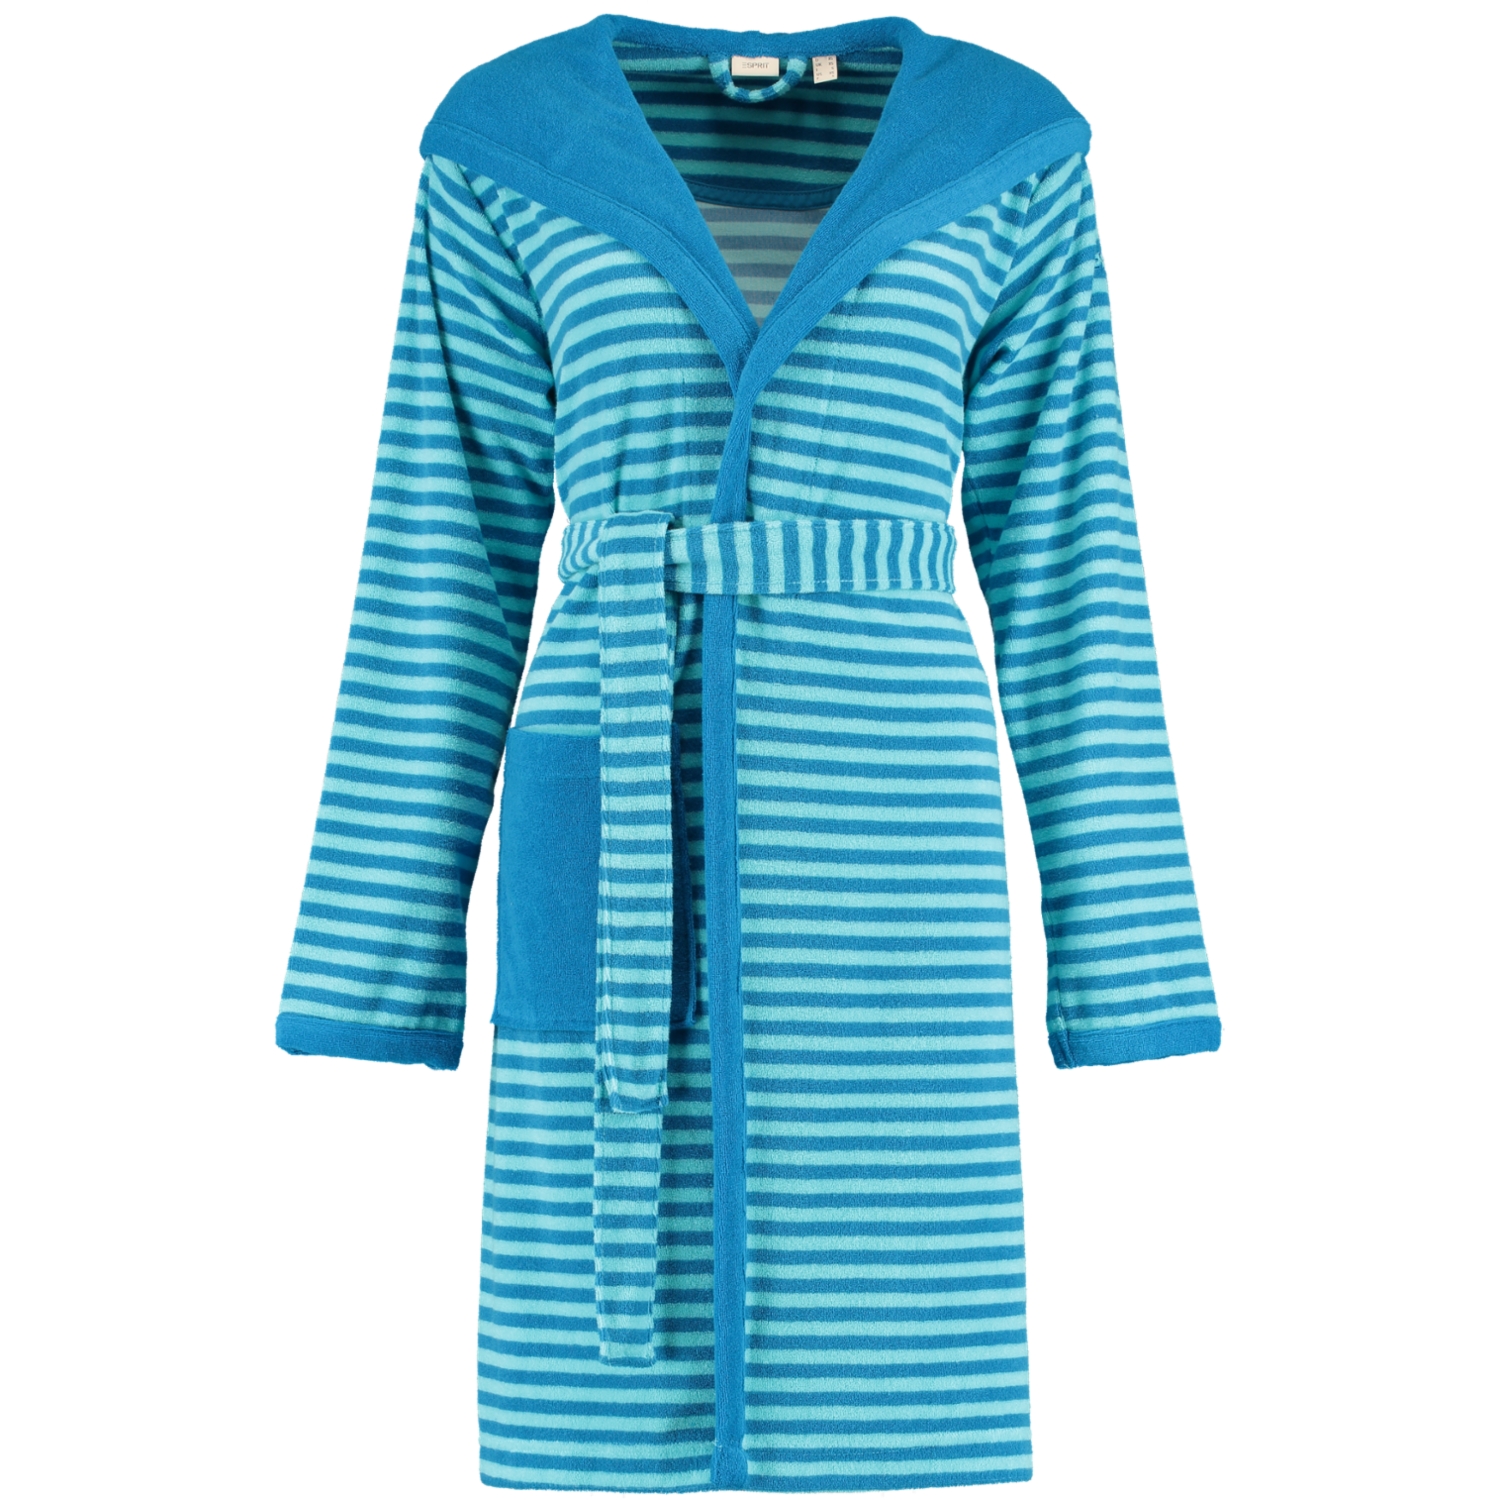 002 - Bademantel Esprit Kapuze turquoise - | Bademantel Striped Damen | Farbe: Damen Hoody